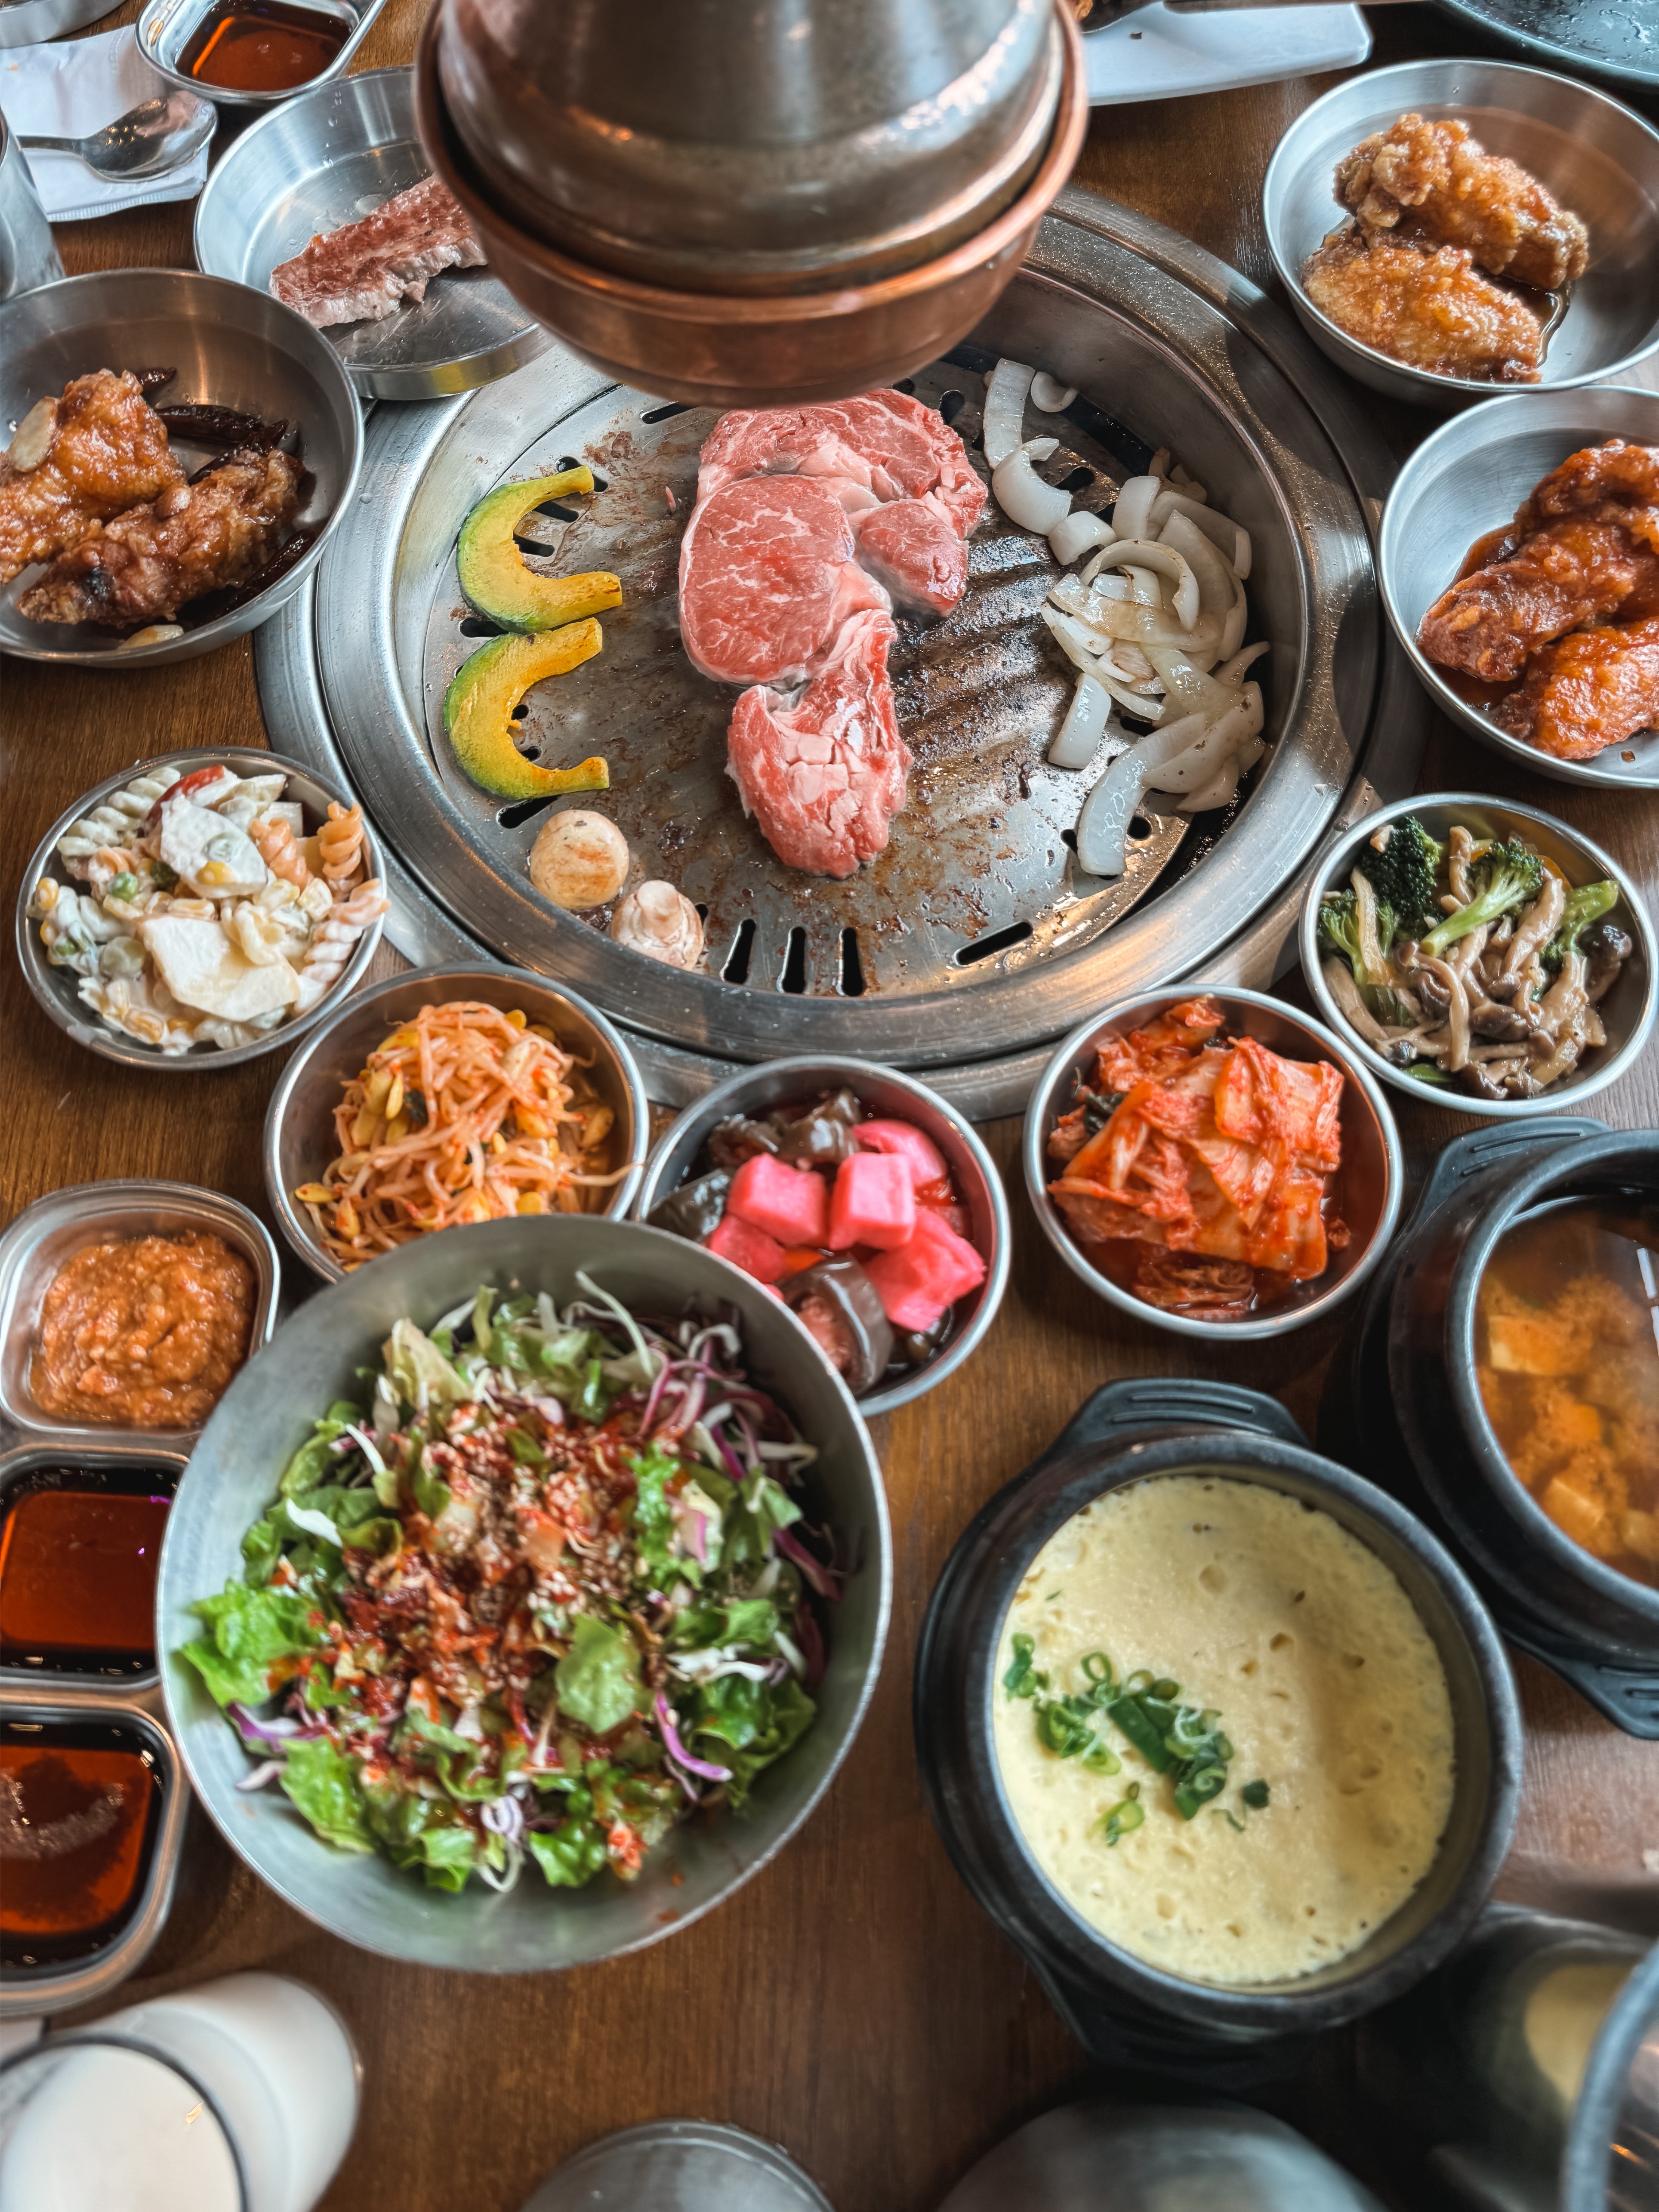 Image for APACC 1st Restaurant Week - Daebak: Where Korean Cuisine Meets Awesome!